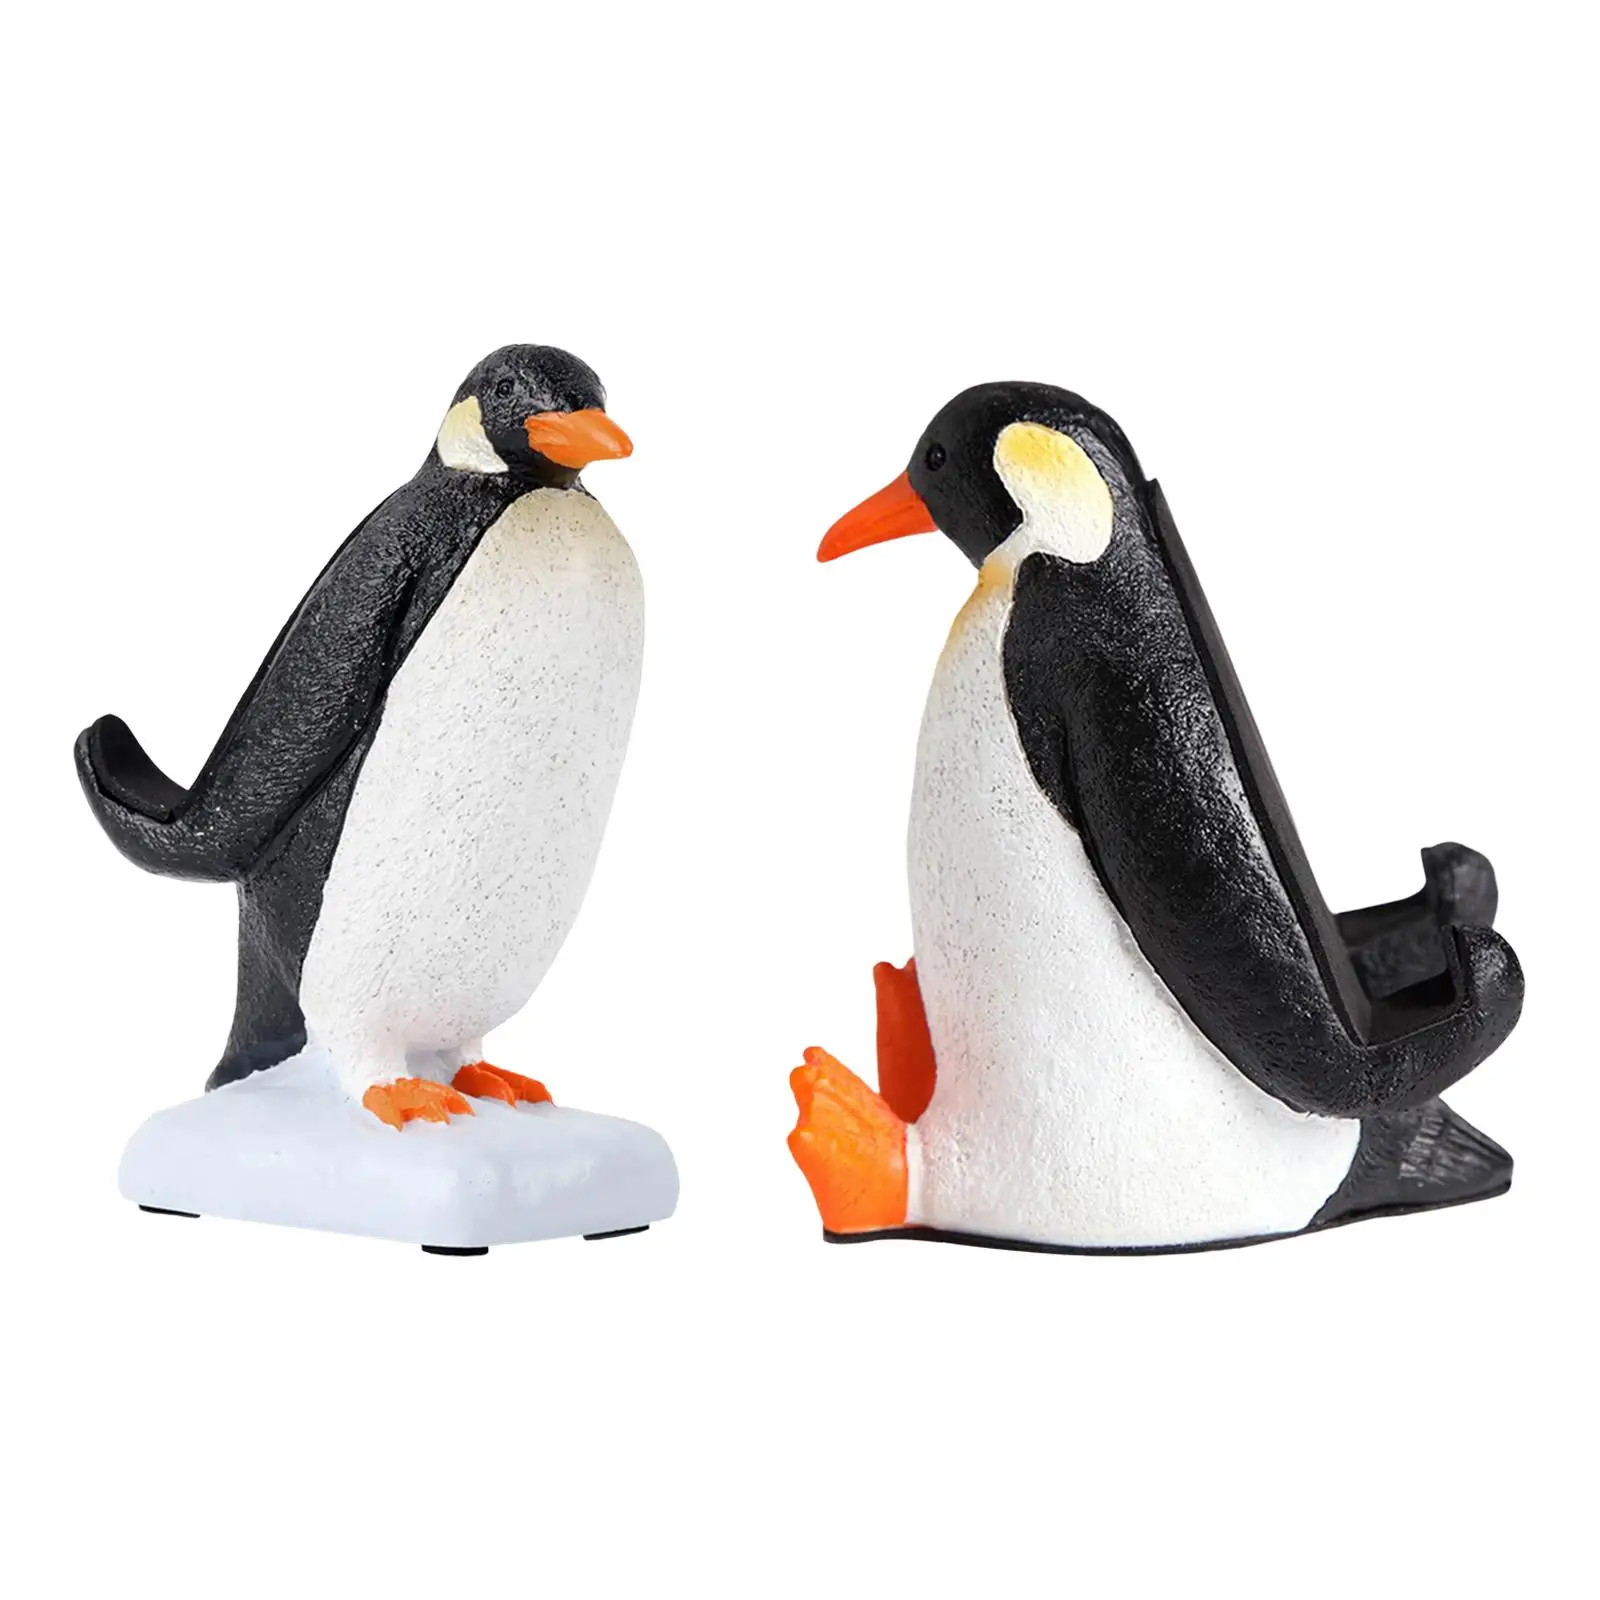 Resin Animal Penguin Statue Desktop Phone Holder Stand Anti Slip Cradle Desktop Figurine Decor Crafts for Office Home Travel